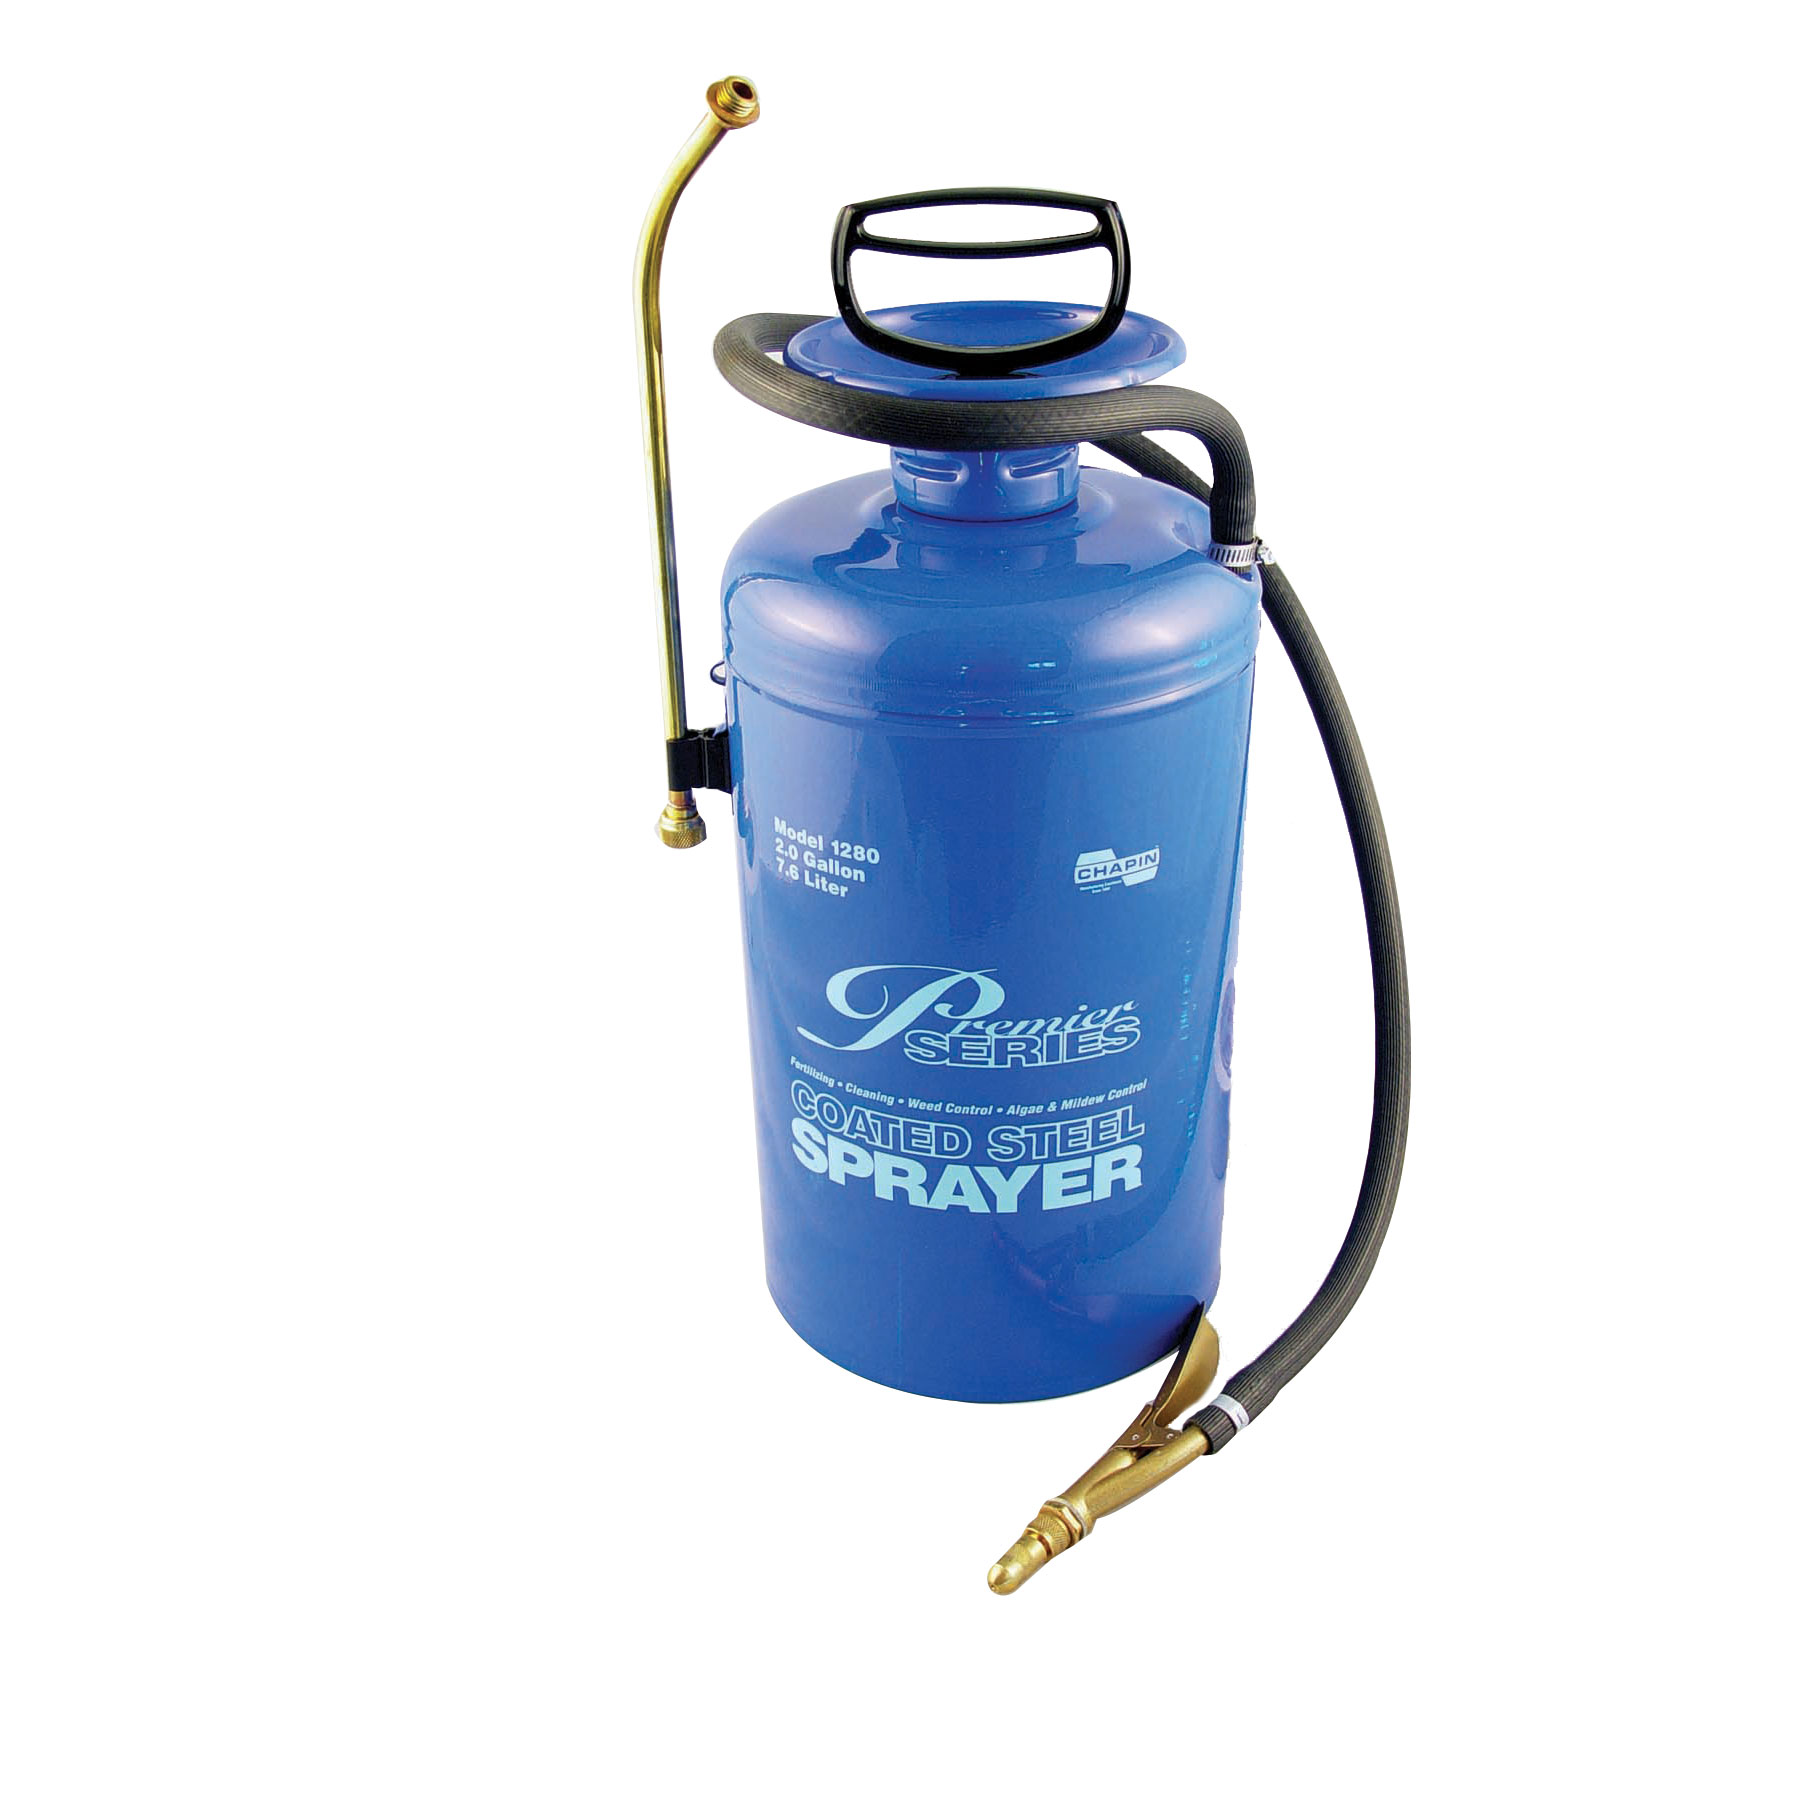 Chapin Premier Commercial Sprayer, 2 Gallon